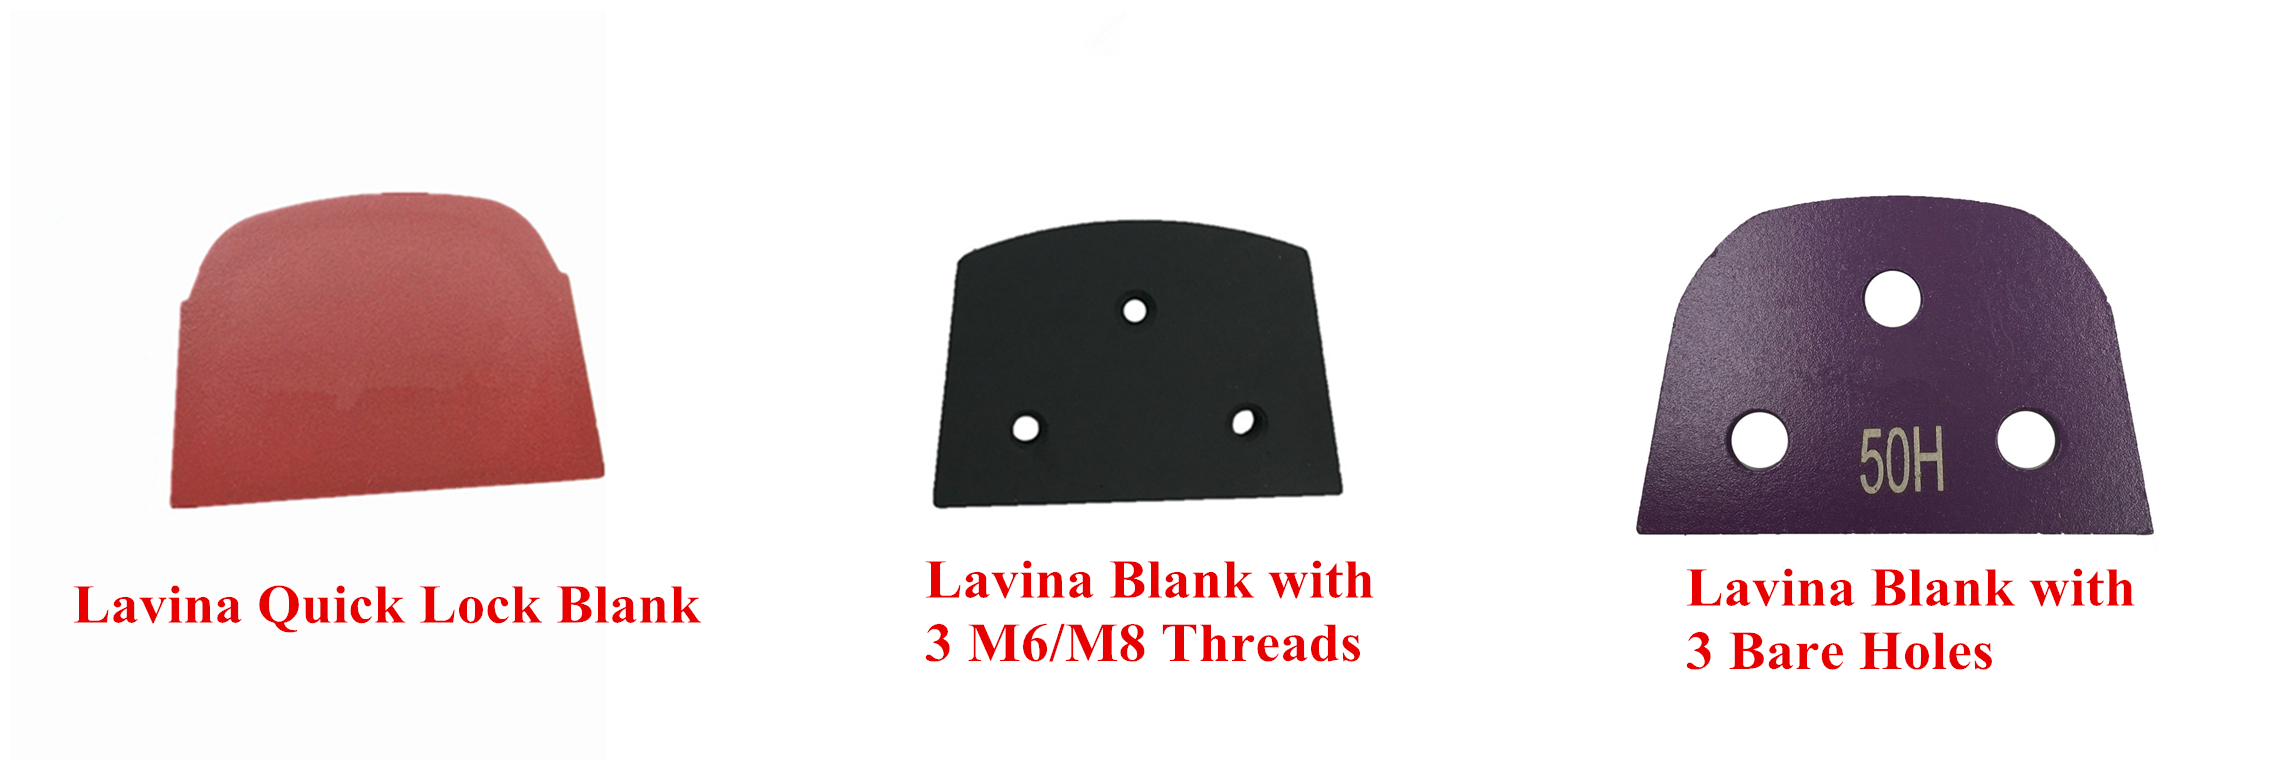 Lavina Quick Lock Grinding Plate